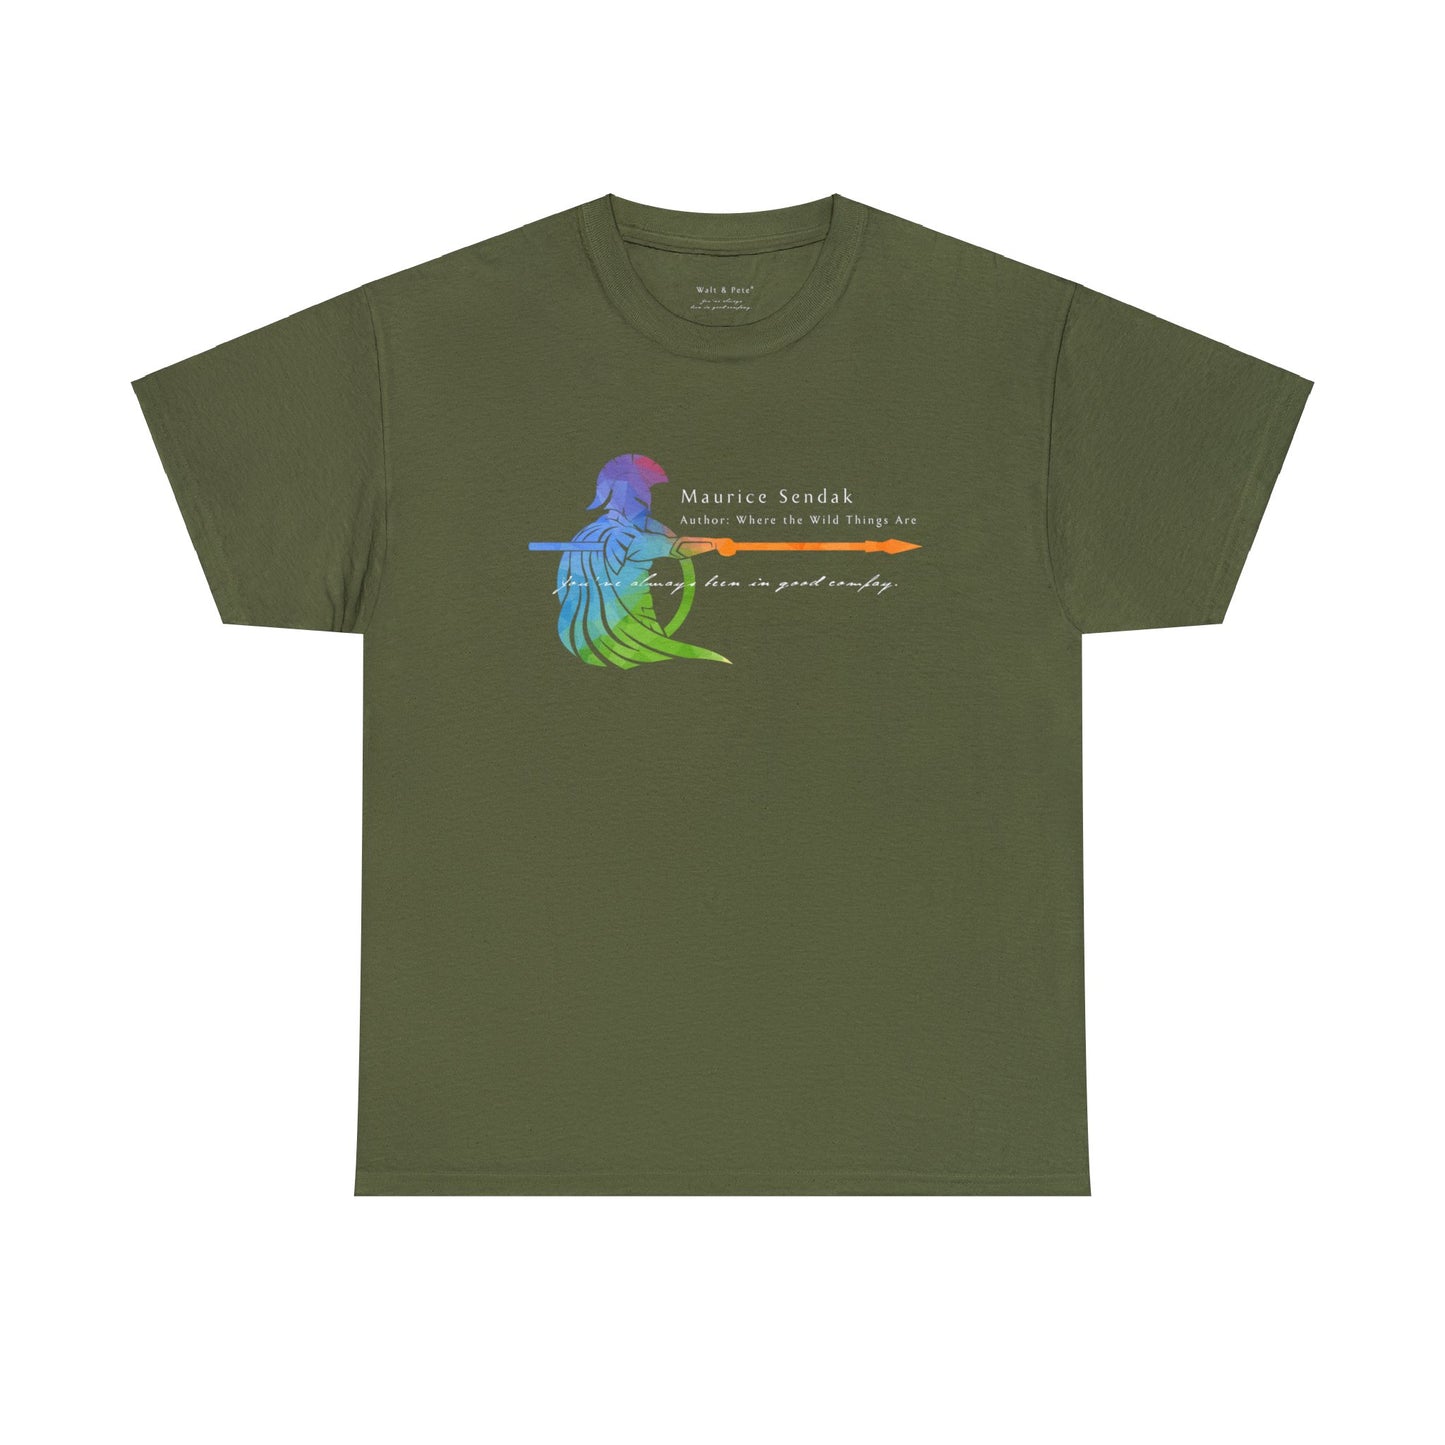 Maurice Sendak | Author: Where the Wild Things Are | Pride T-Shirt